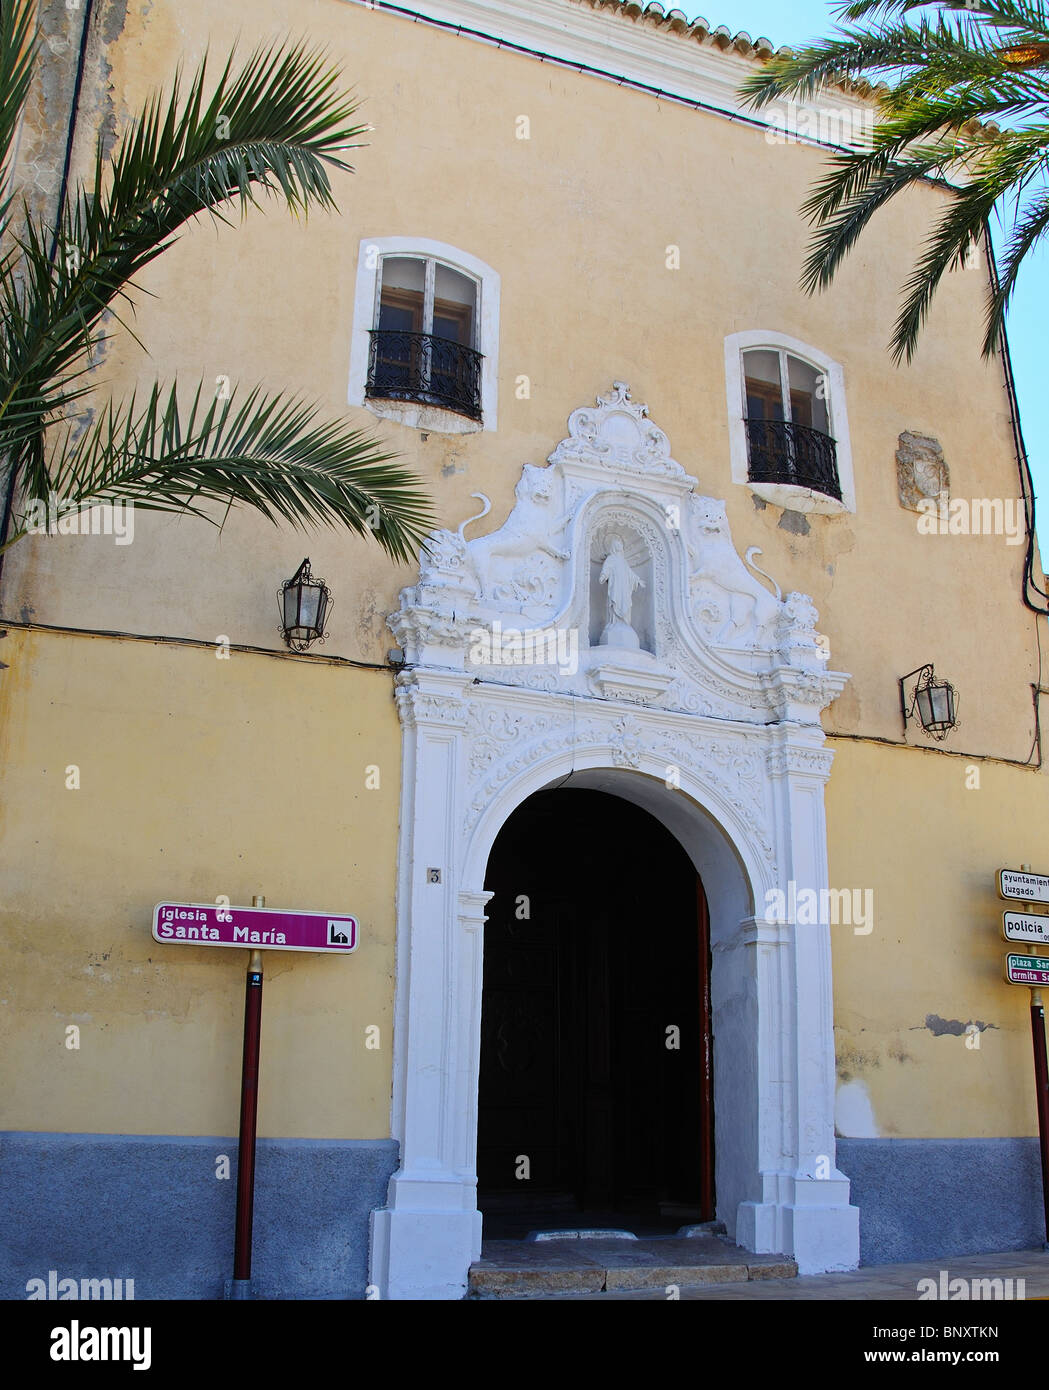 Santa Maria church, Albox, Almeria Province, Andalucia, Spain, Western Europe. Stock Photo